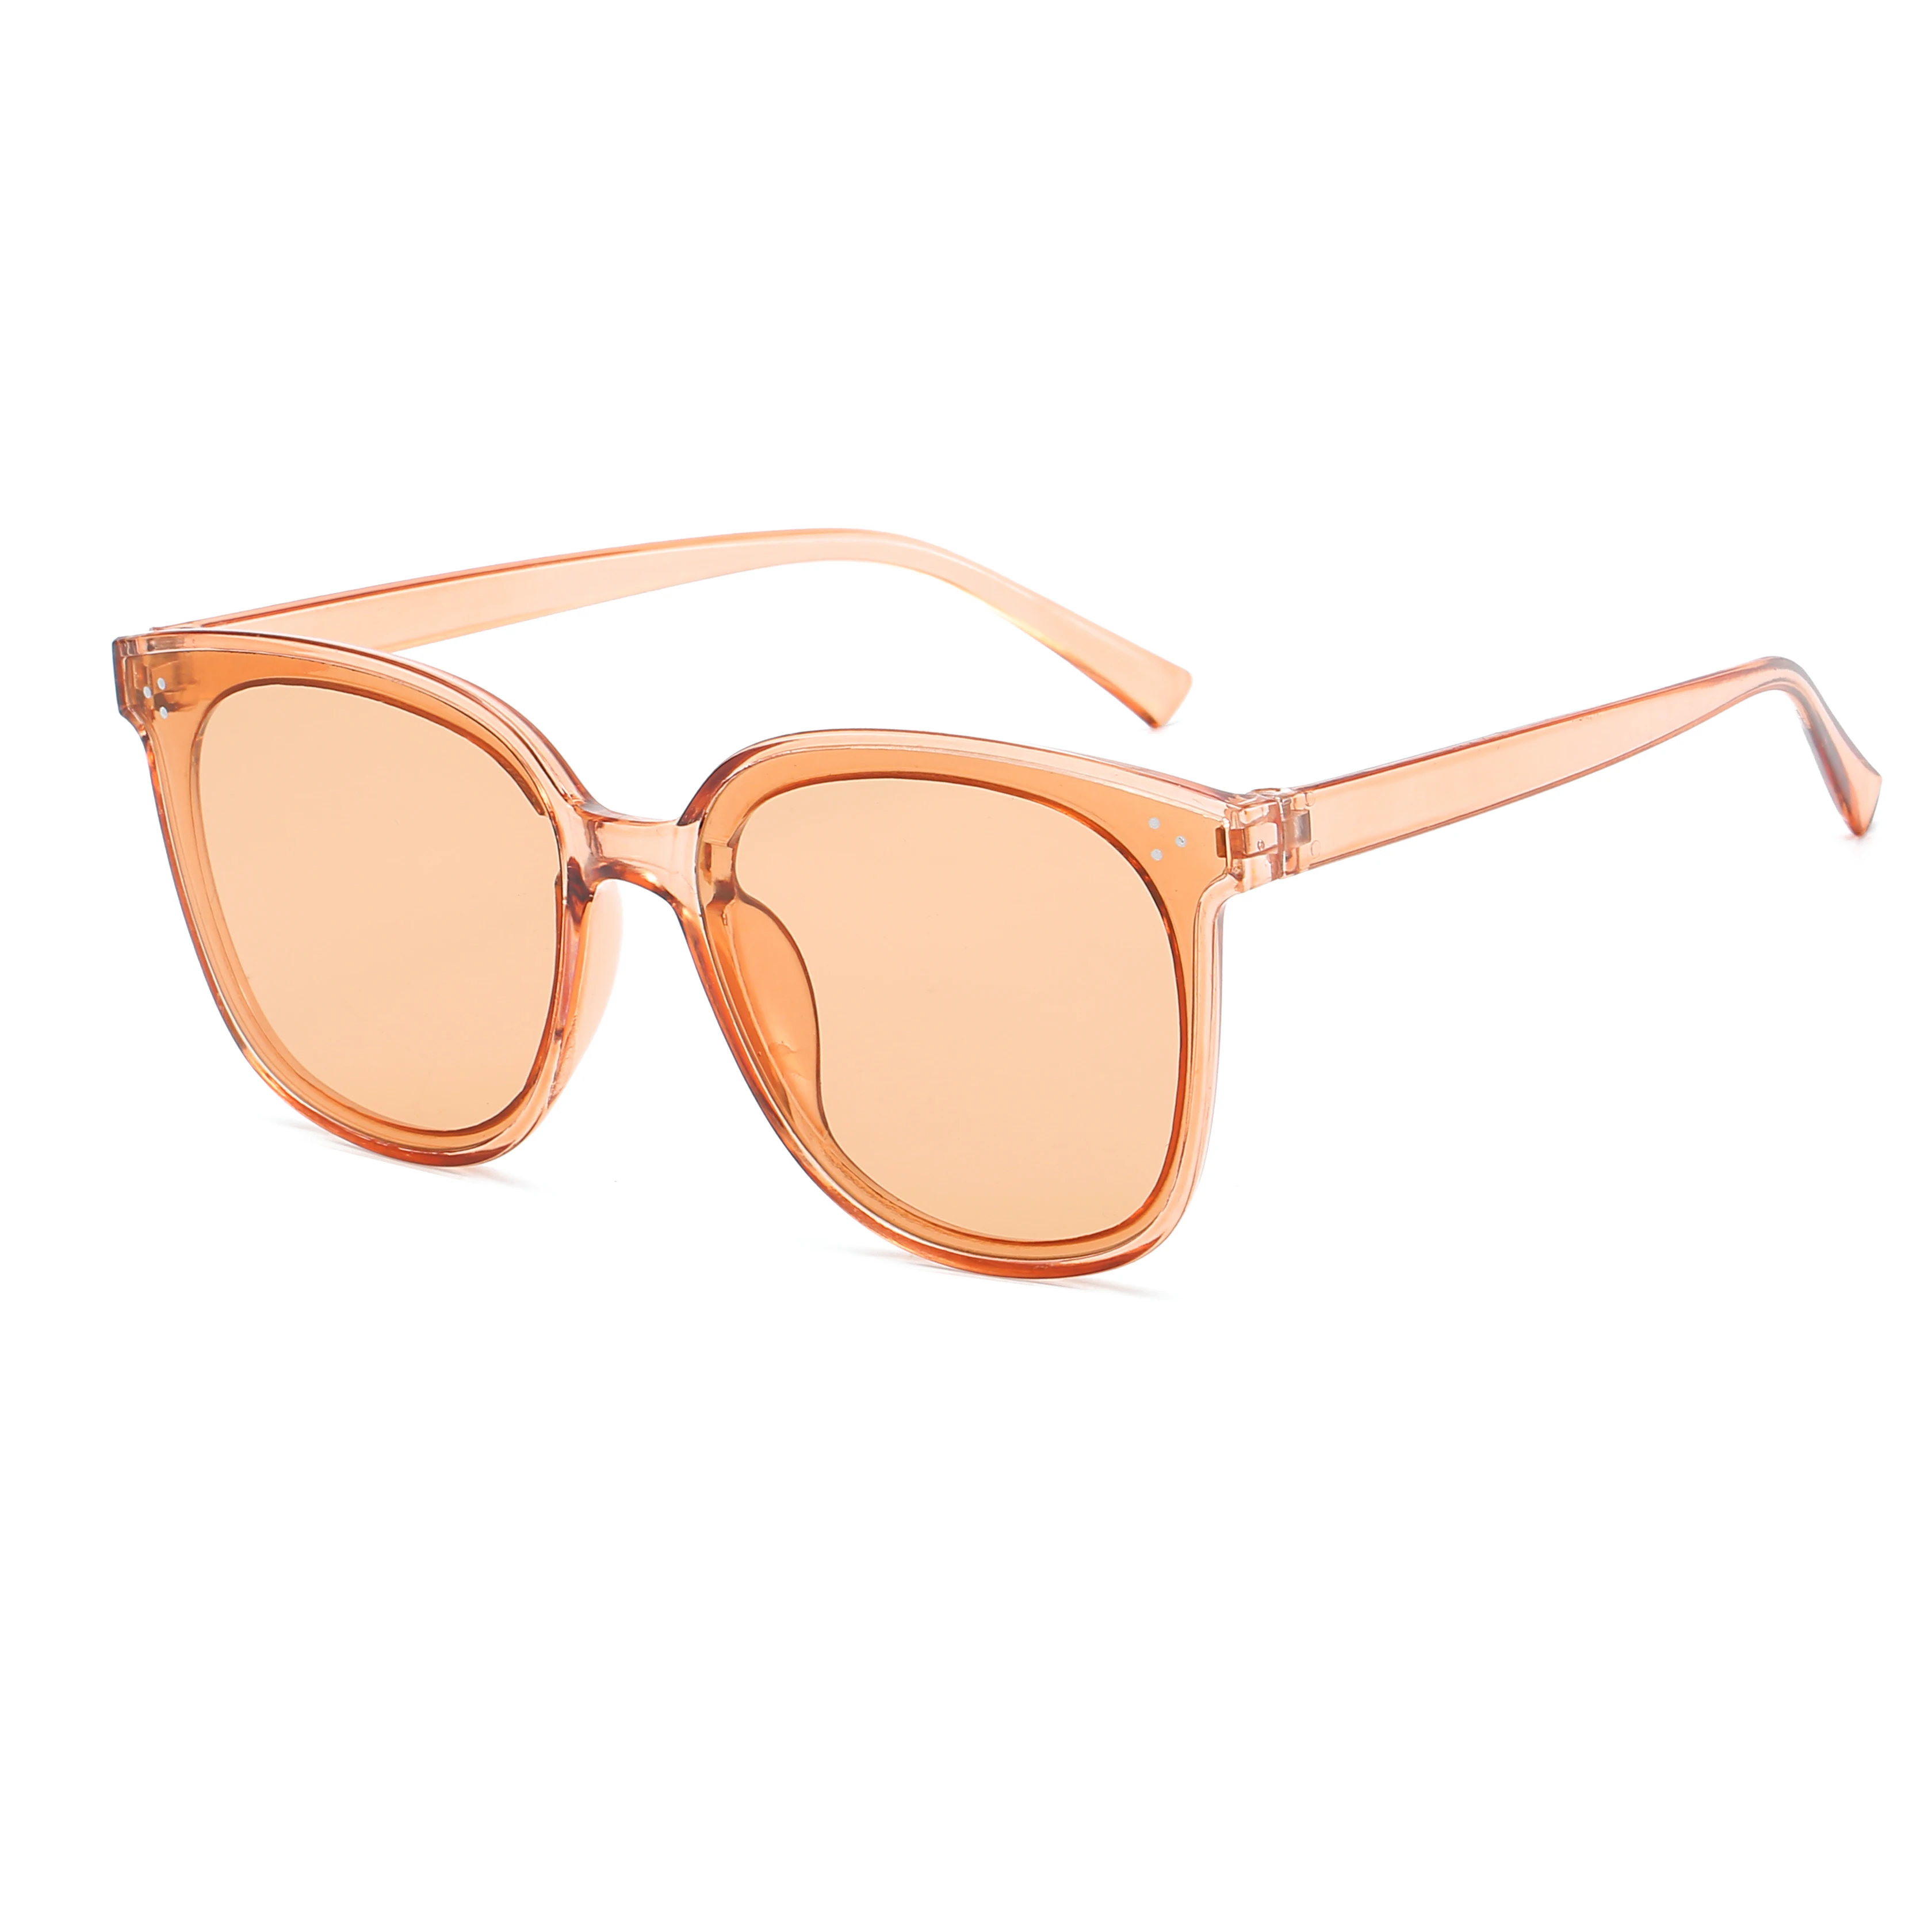 

RENNES [RTS] Hot sell Stylish square PC frame unisex sunglasses wholesale UV400 color frame glasses with Irregular Frame, Choose